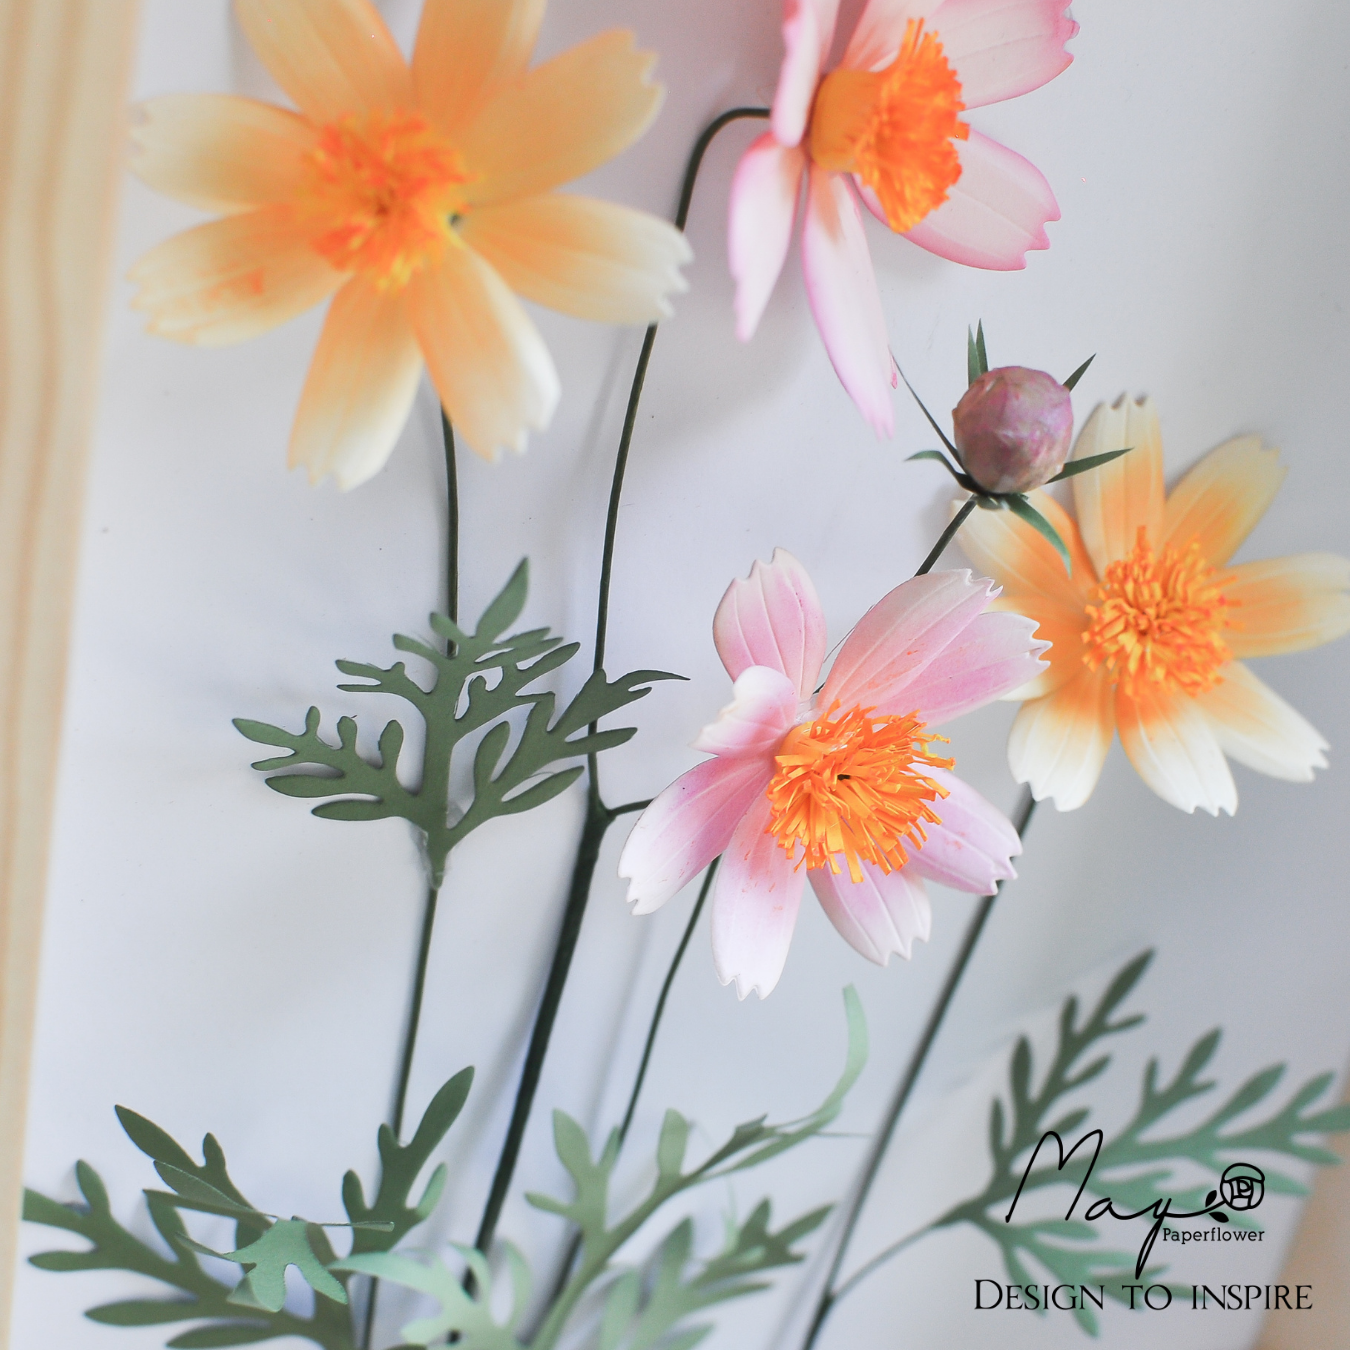 Tranh hoa giấy handmade trang trí cao cấp SIMPLICITY Hoa Sao Nhái 20x25cm - Maypaperflower Hoa giấy nghệ thuật